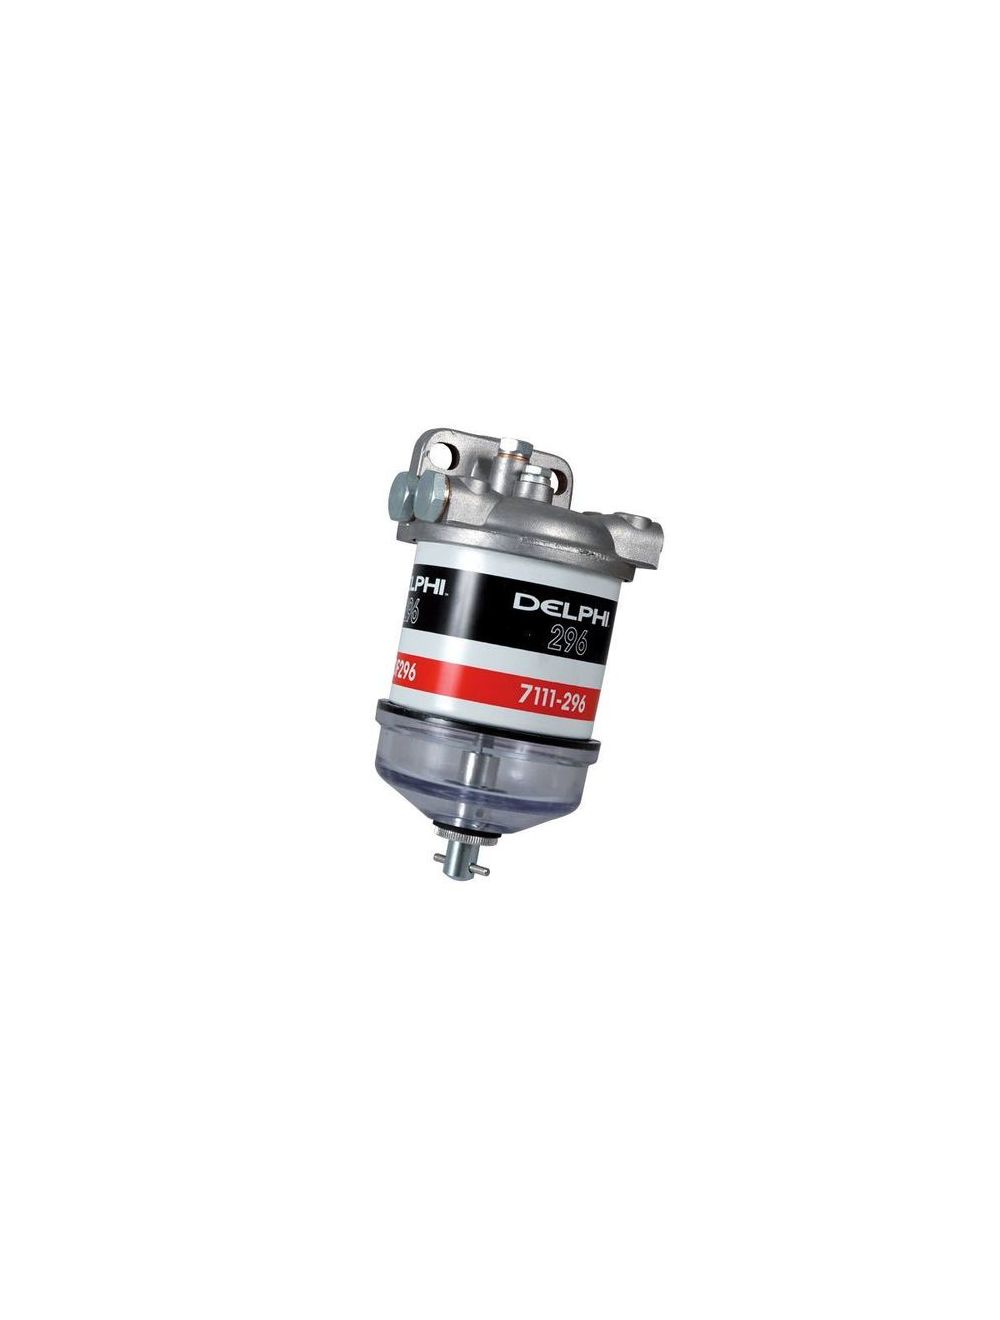 Cav Filter/Wasserabscheider Original mit Glassockel, Cav Universal- Dieselfilter - 9,89 EUR